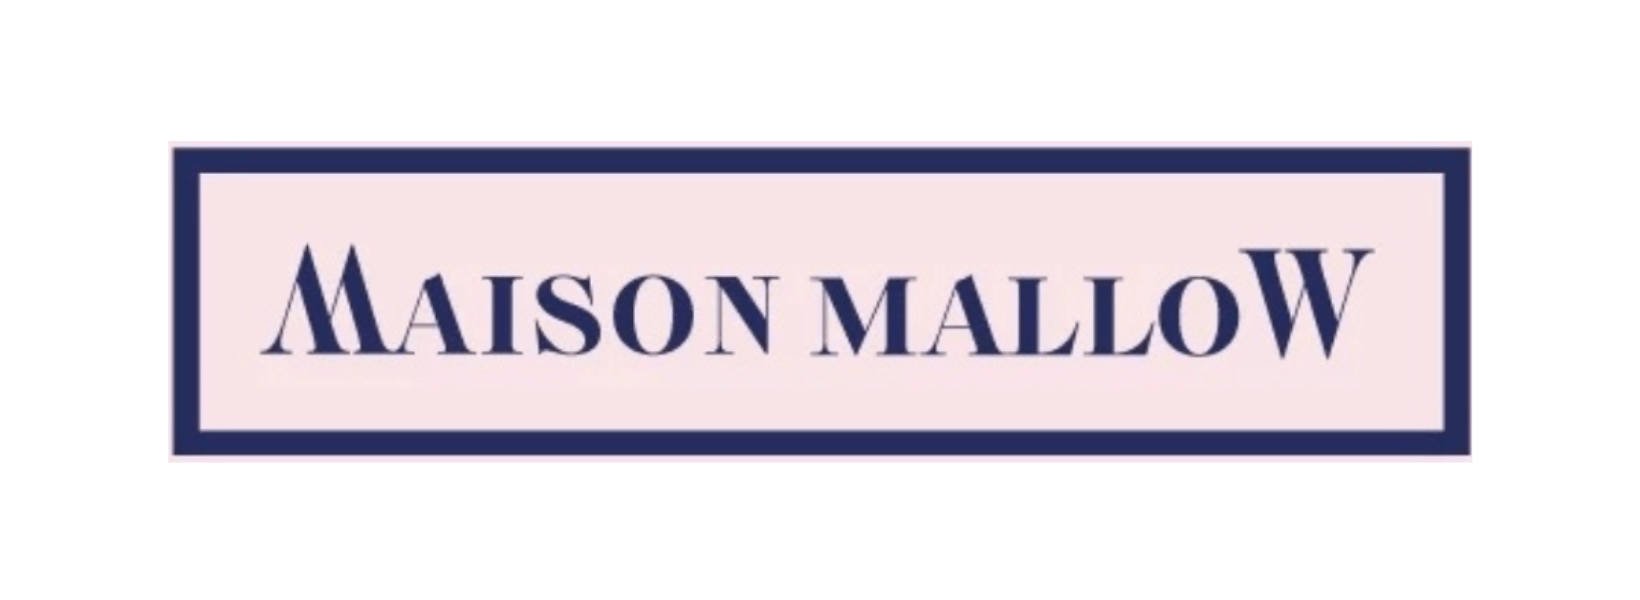 Maison Mallow